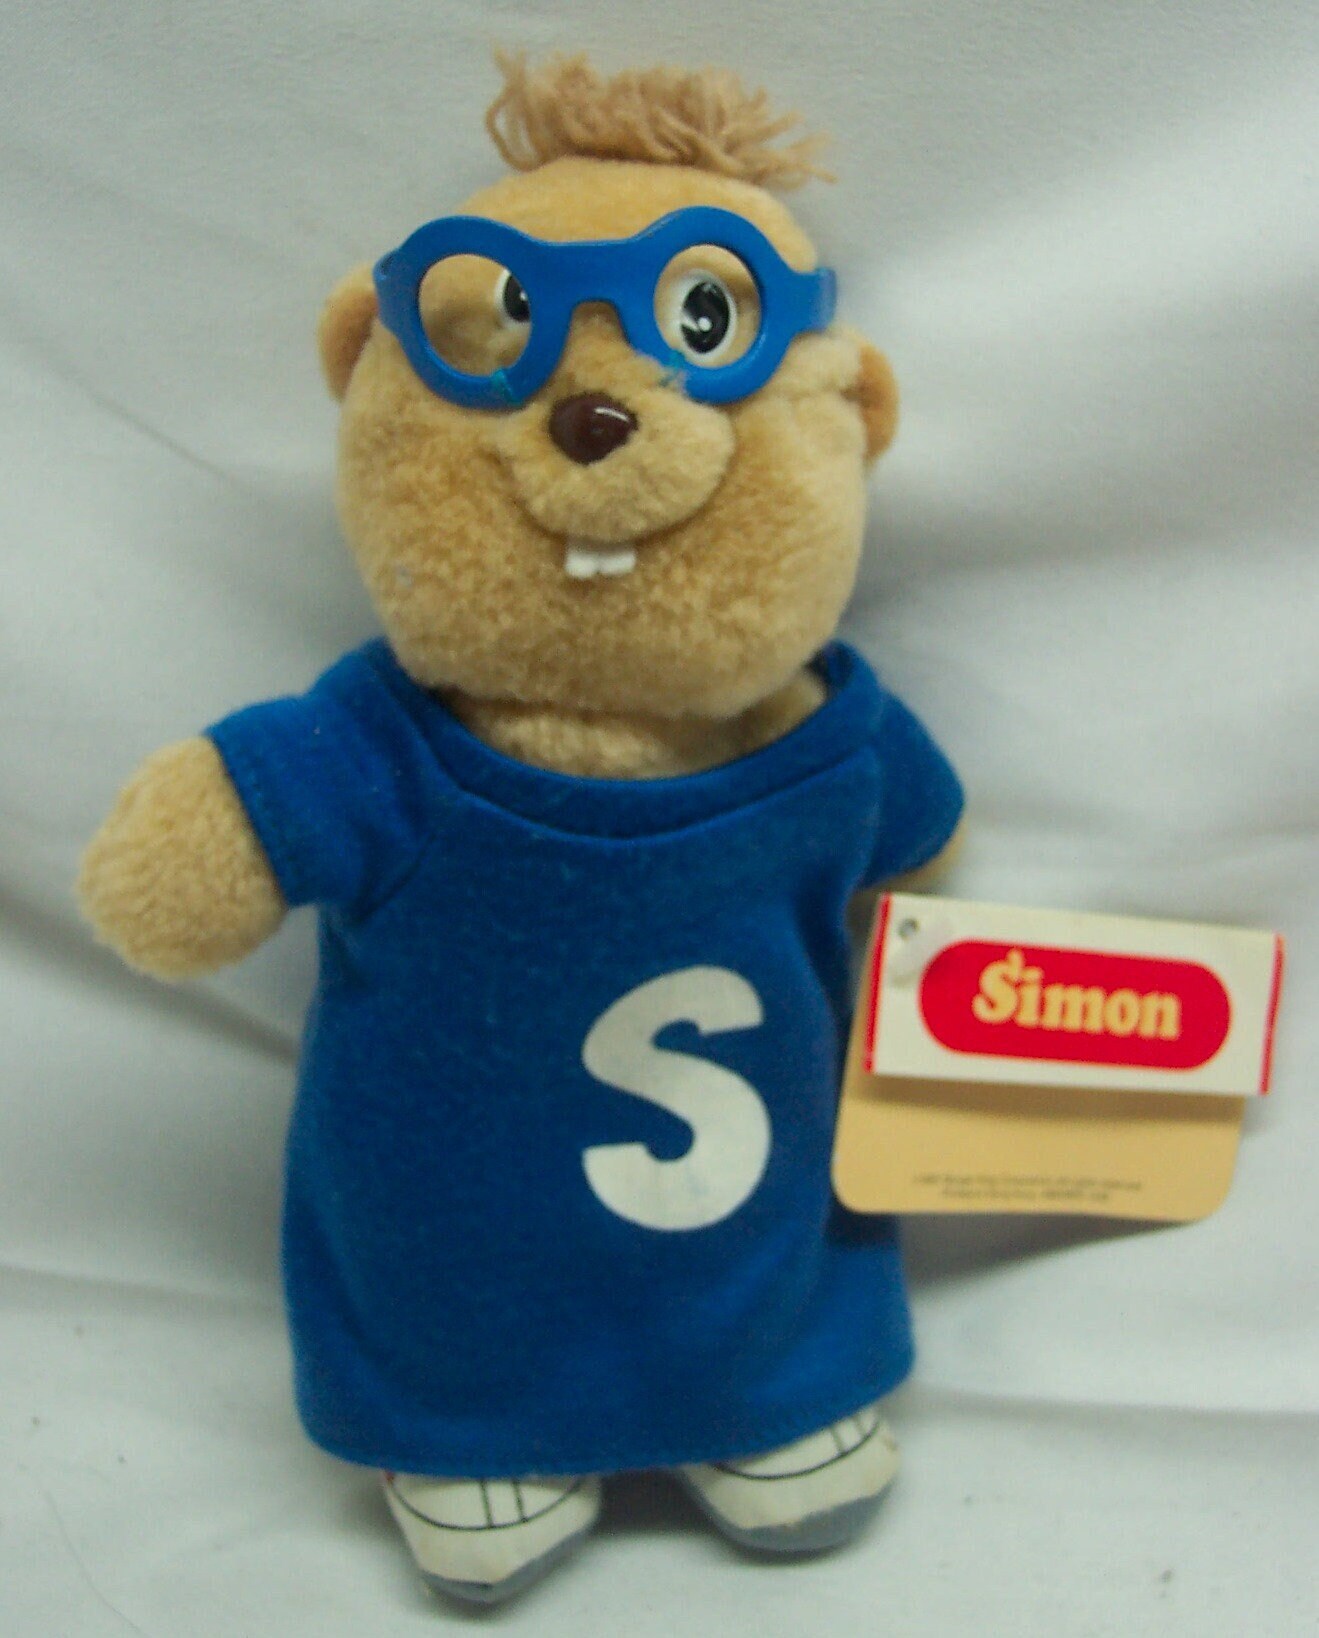 Vintage 1987 Alvin and the Chipmunks Simon Stuffed Animal Plush Toy